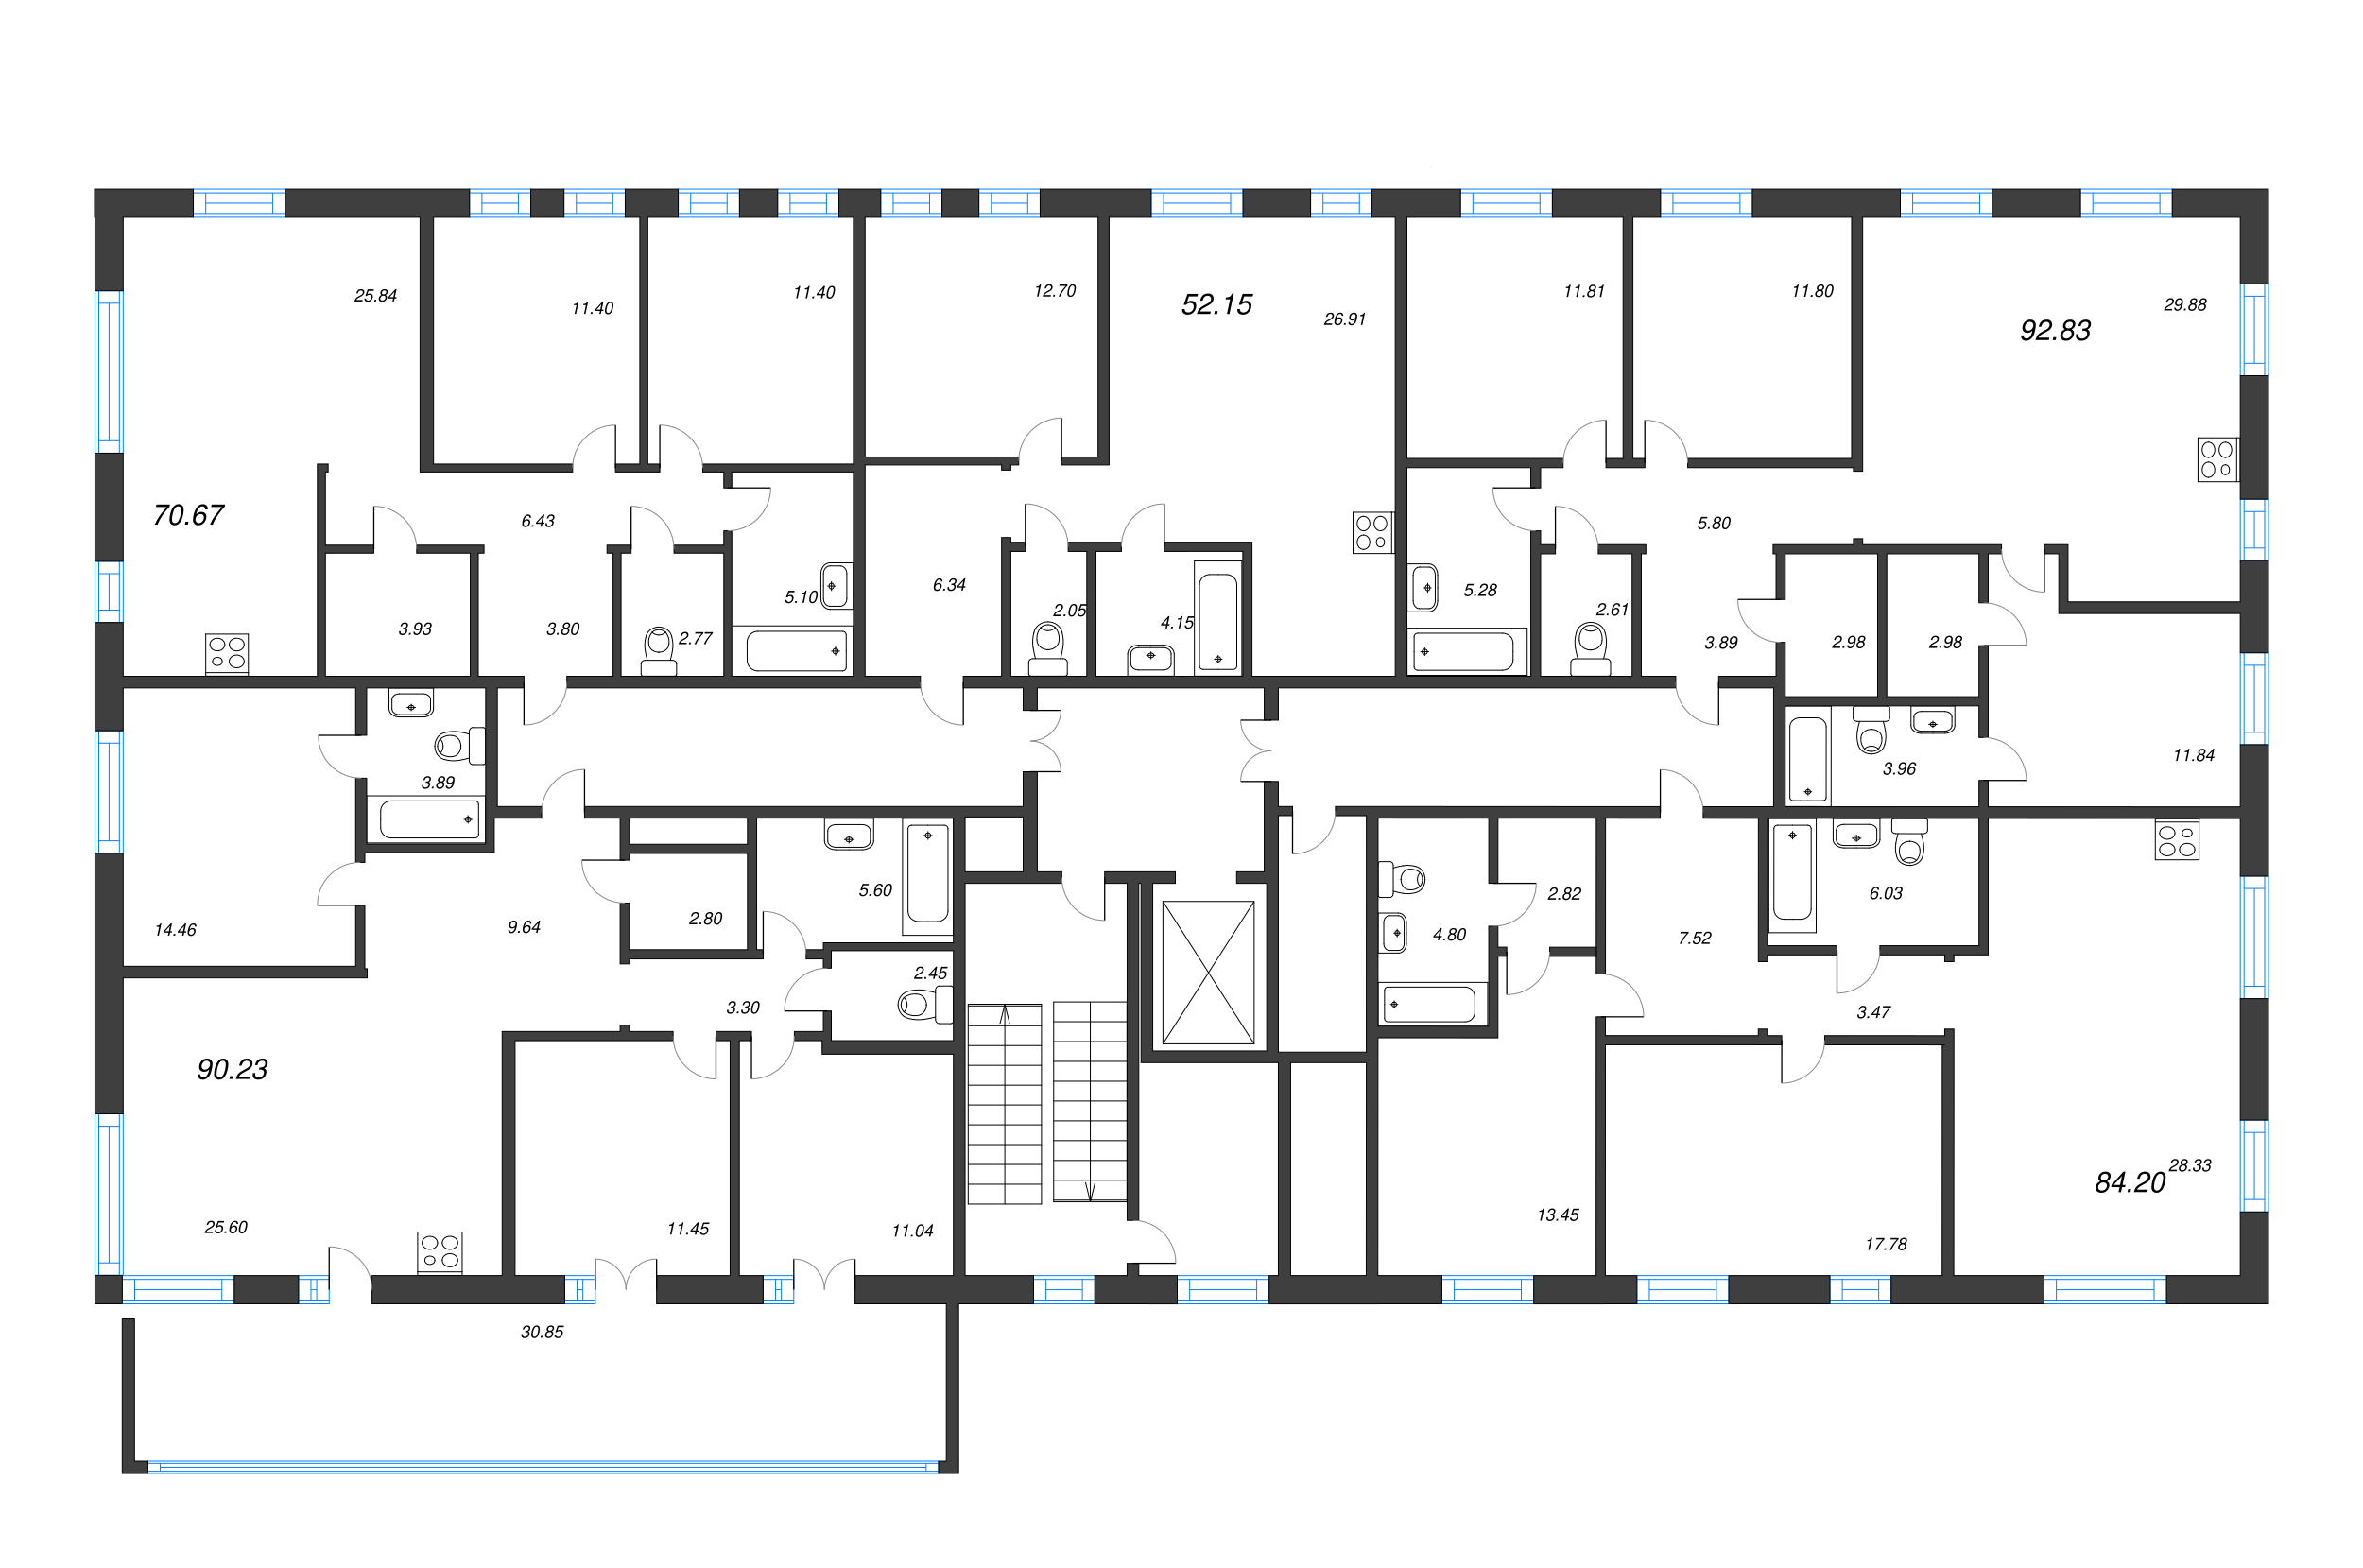 4-комнатная (Евро) квартира, 92.83 м² - планировка этажа